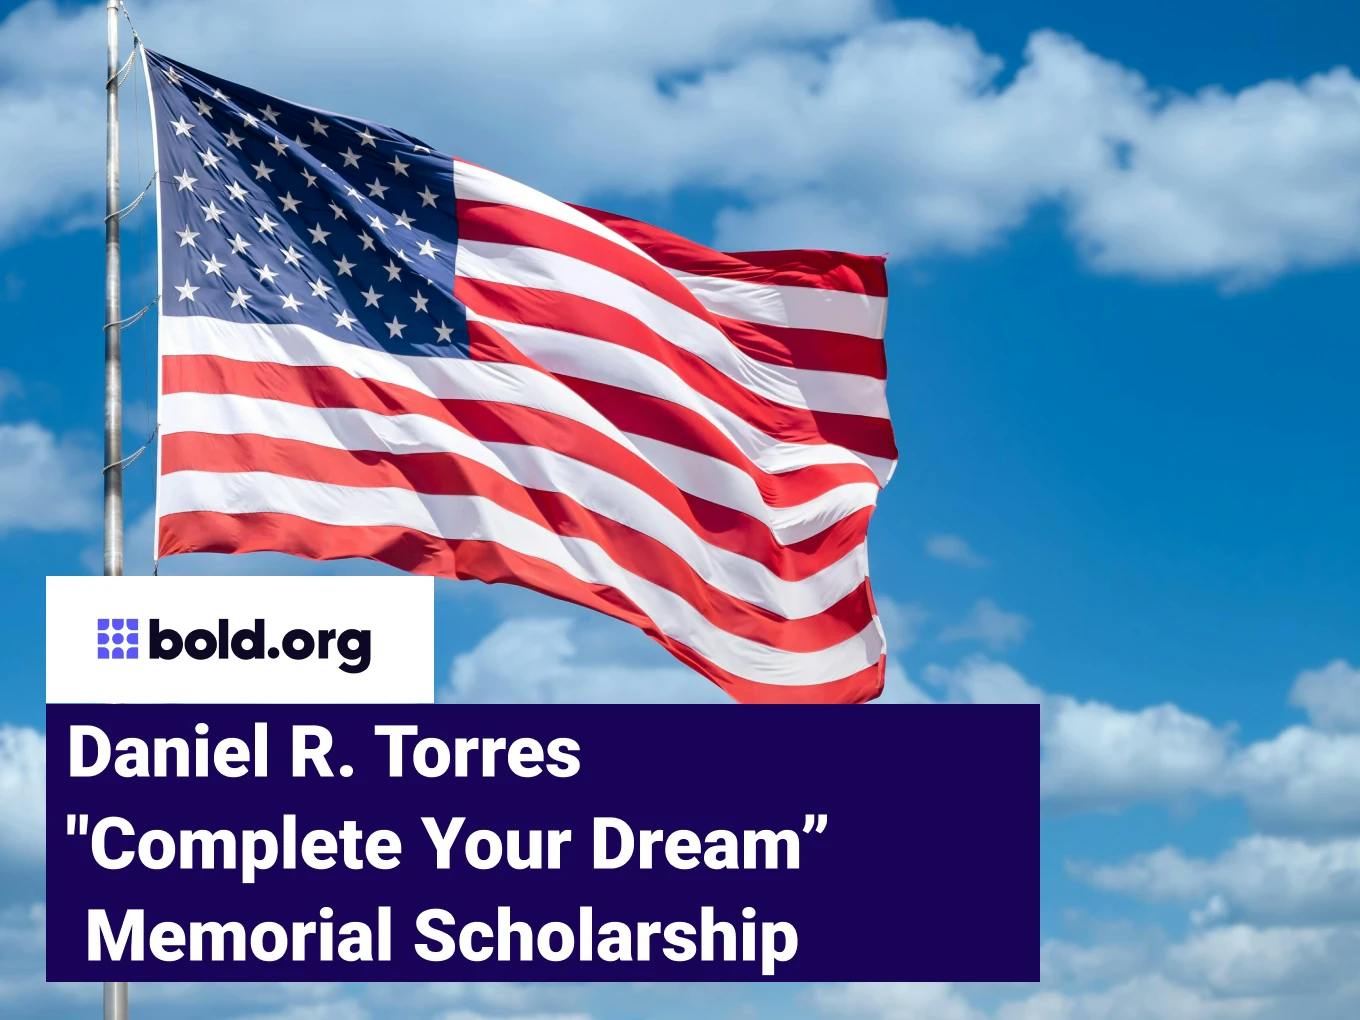 Daniel R. Torres "Complete Your Dream” Memorial Scholarship